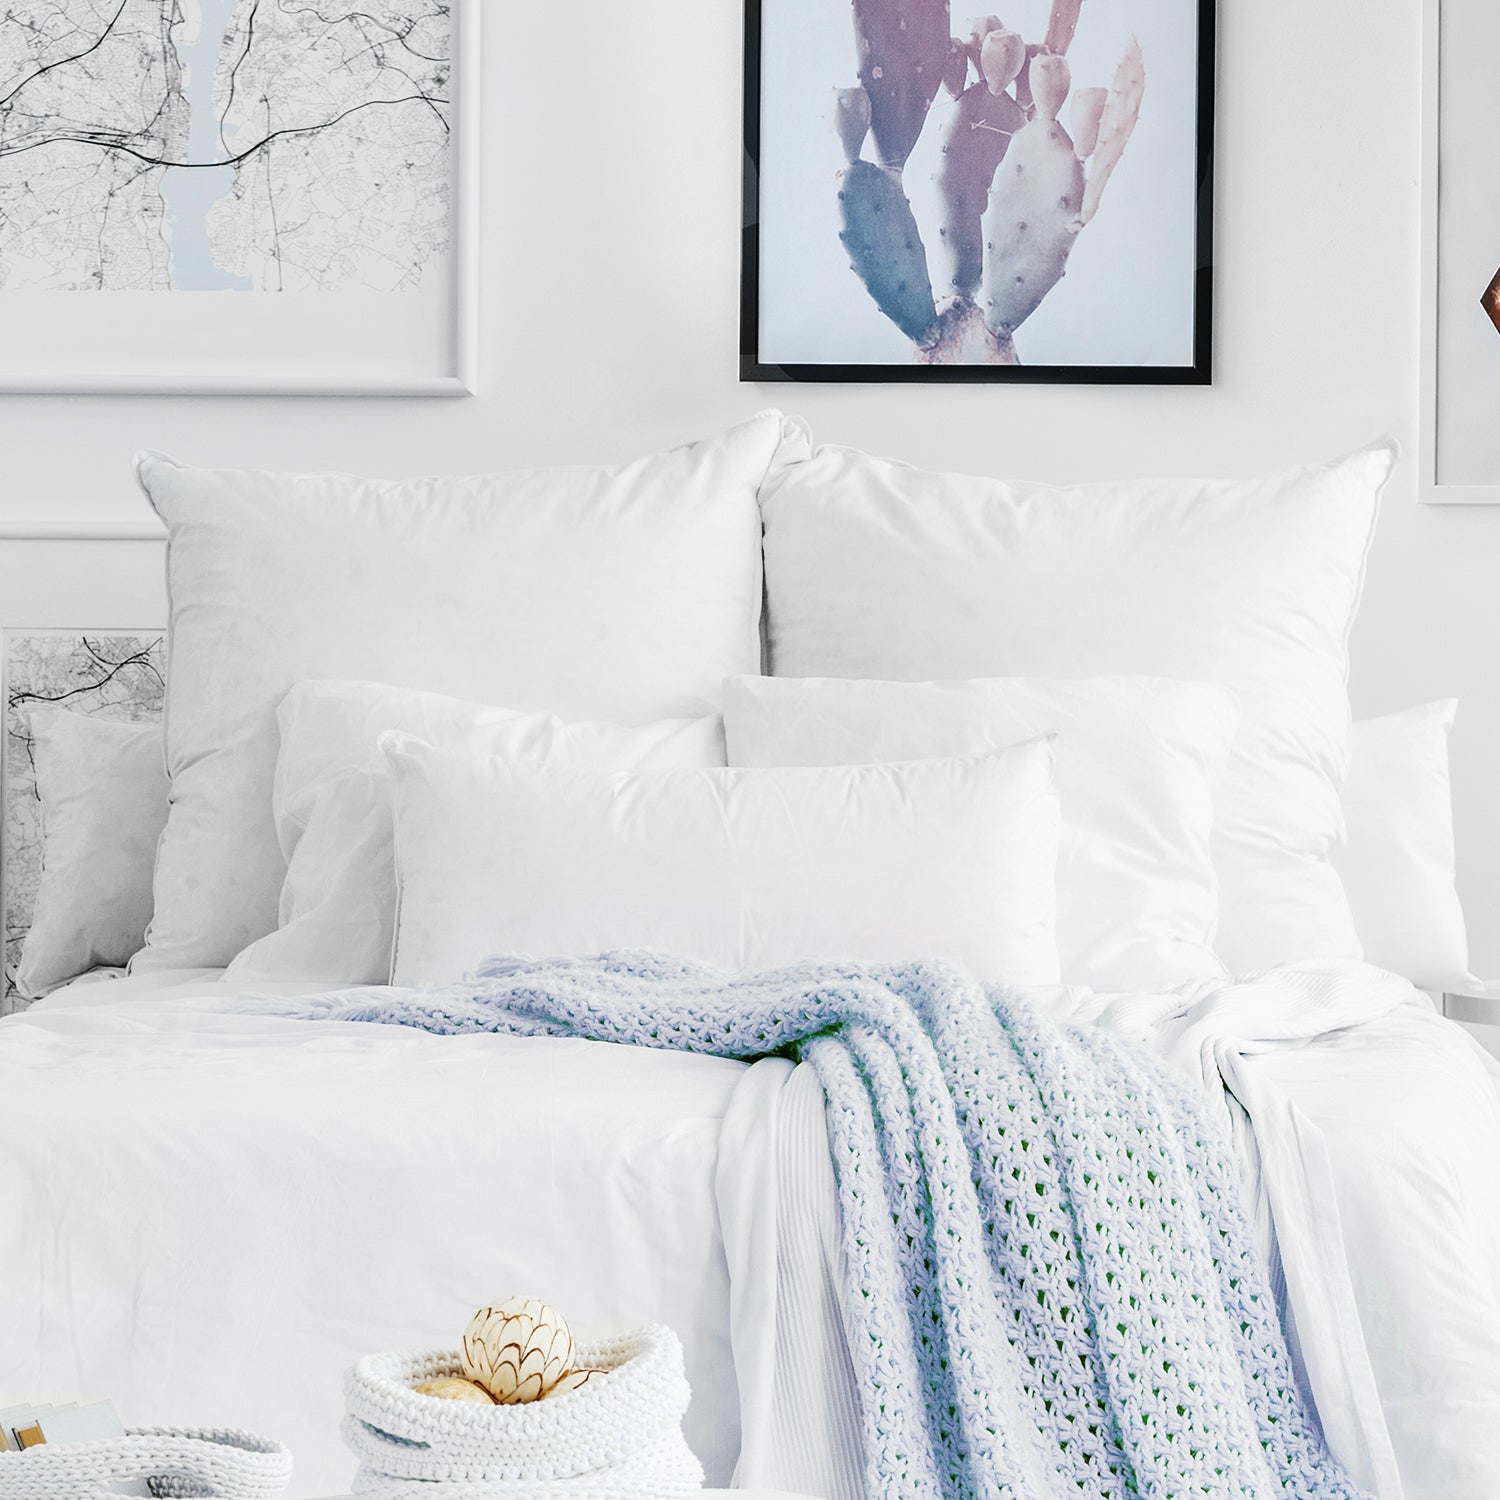 1pc White Bedding Pillow, Minimalist Pillow Insert, For Bedroom